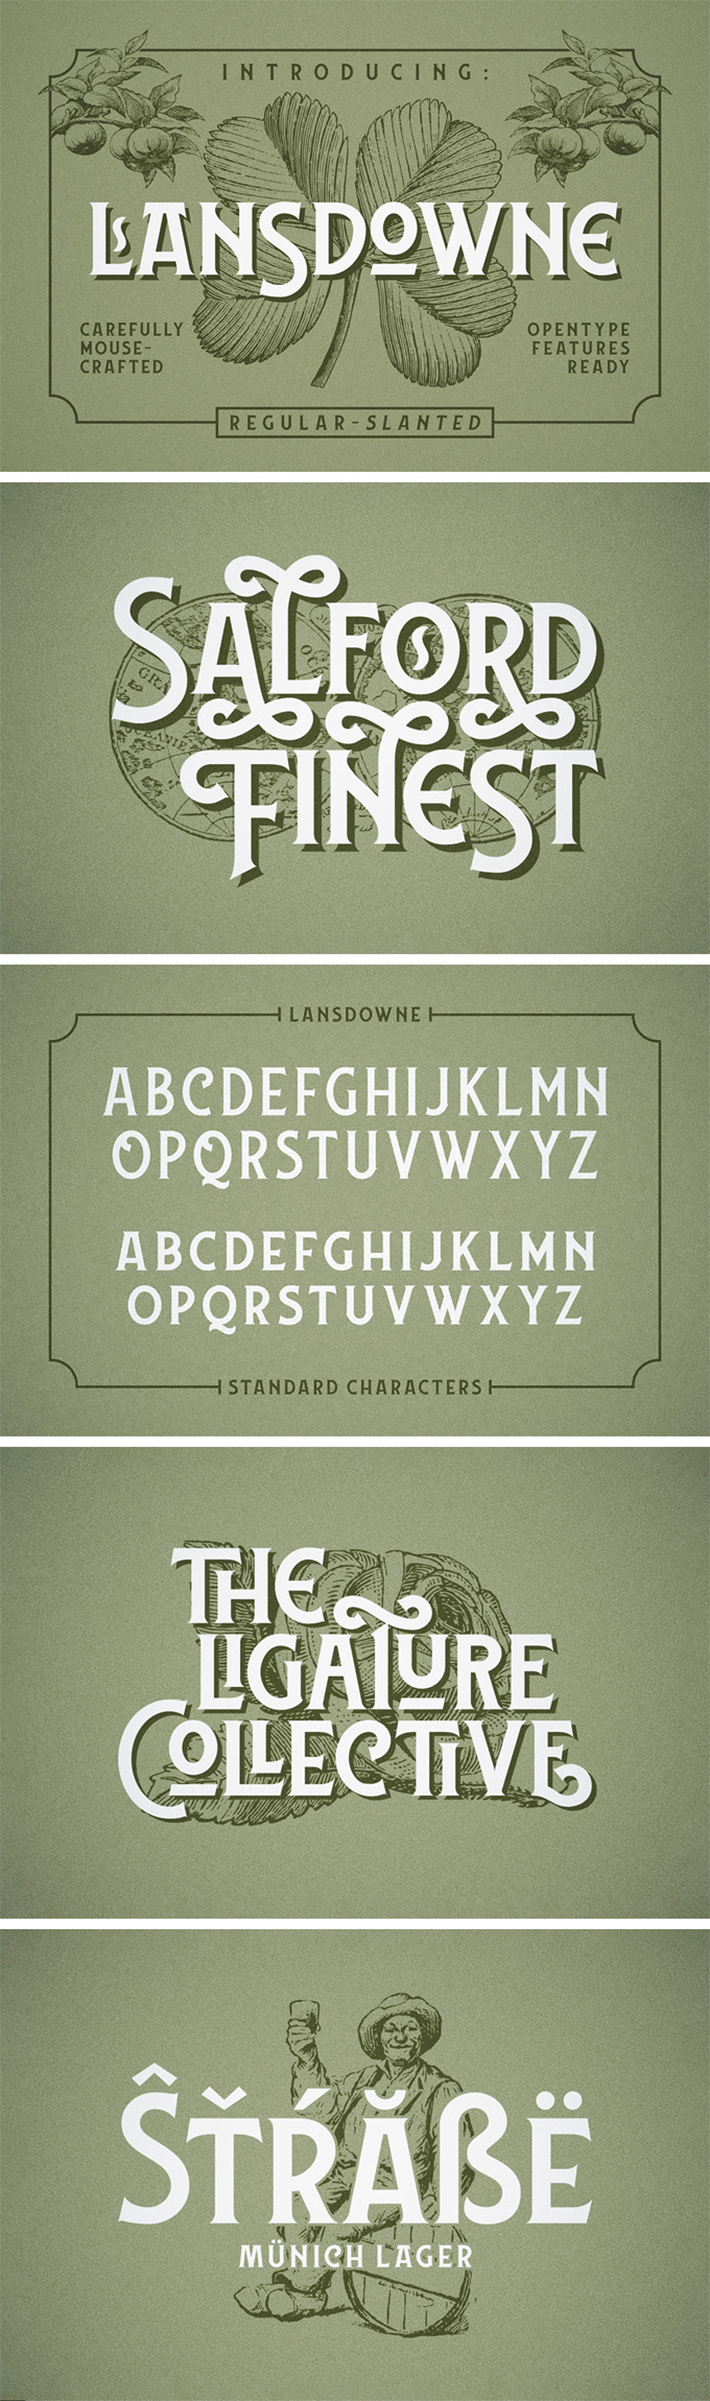 Free Download Elegant Lansdowne Font For Designers